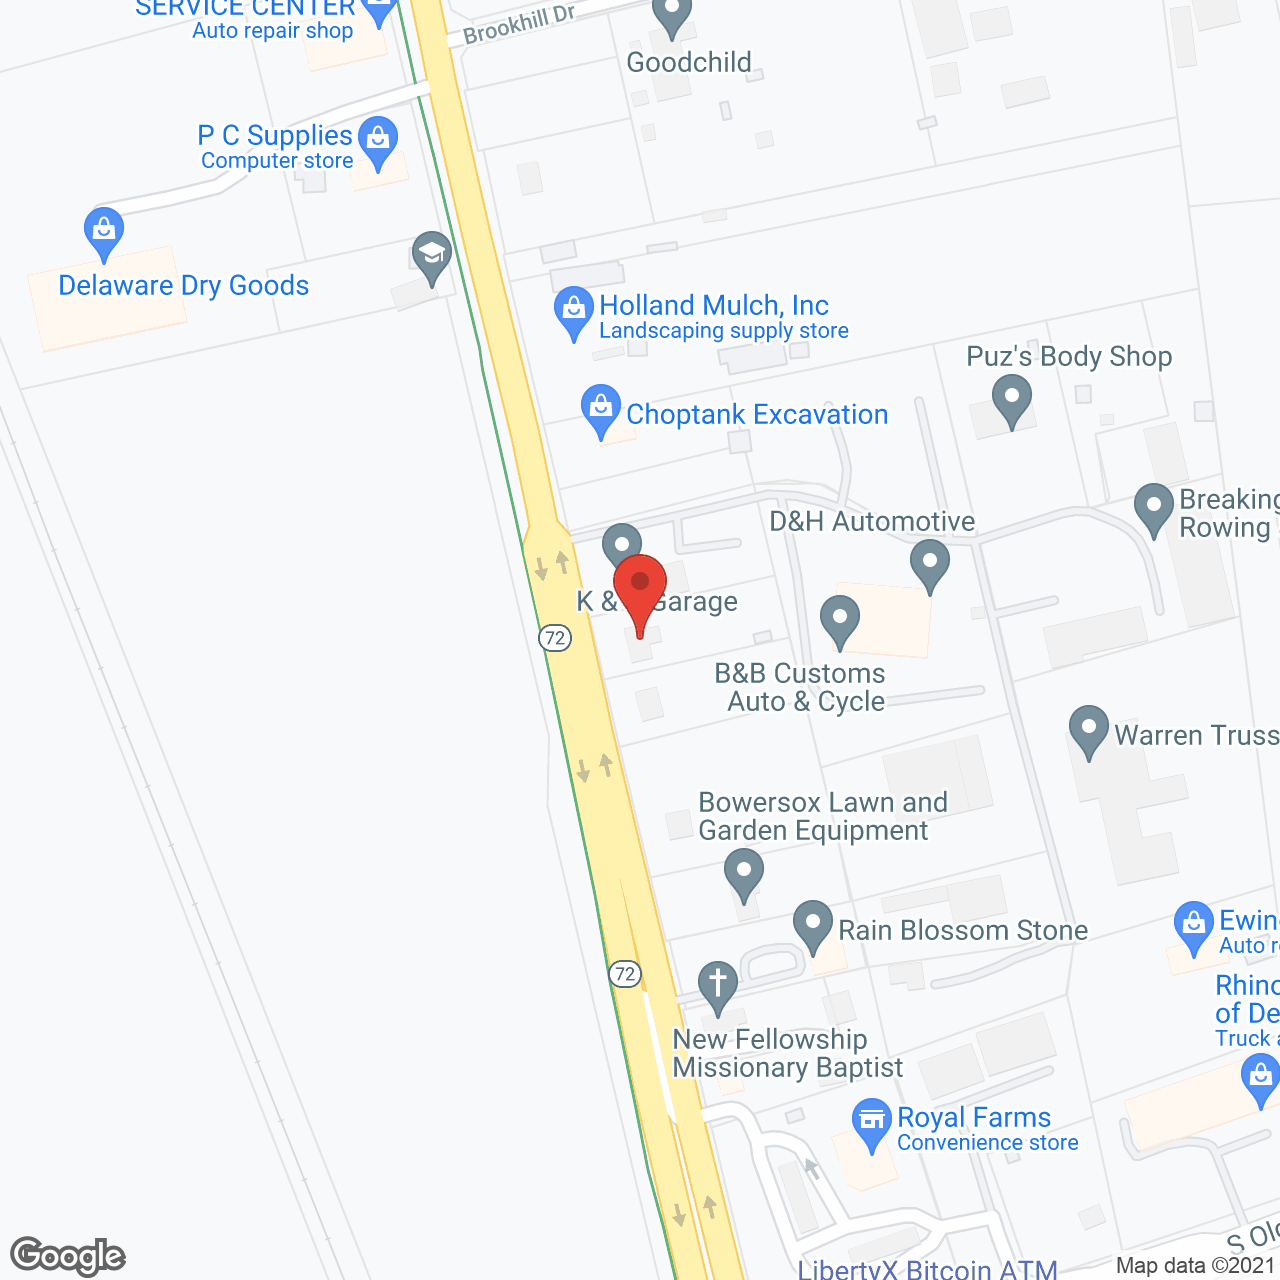 R & C Home for Elderly in google map